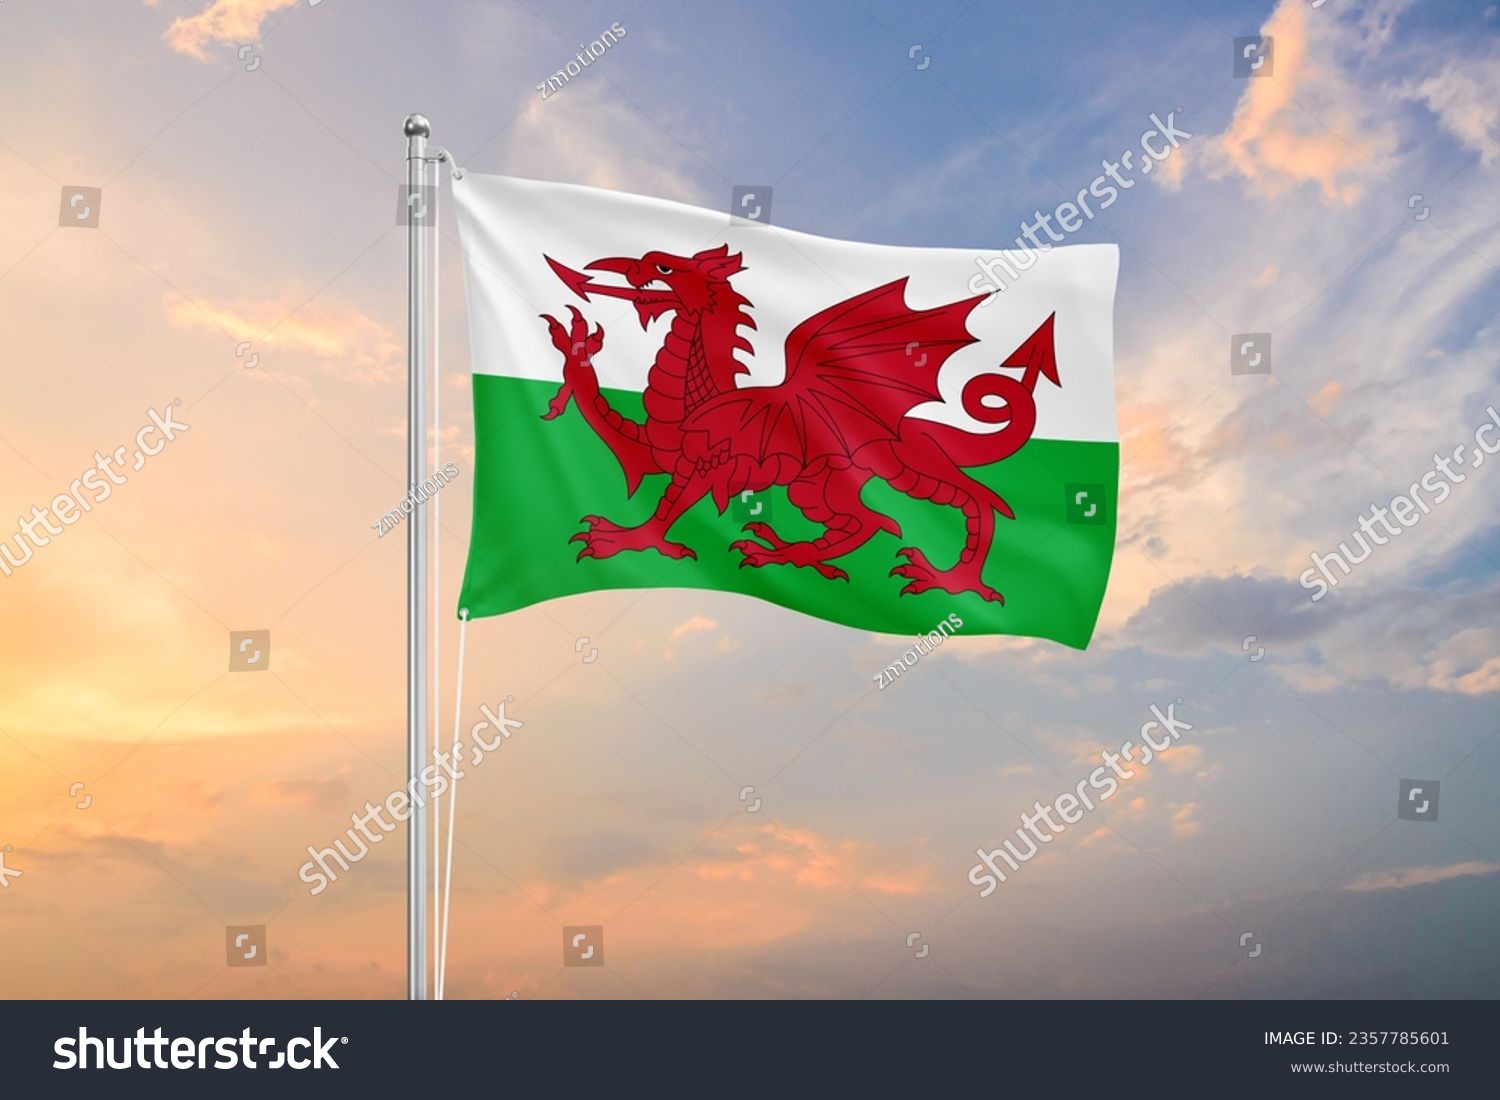 Wales flag waving on sundown sky #2357785601